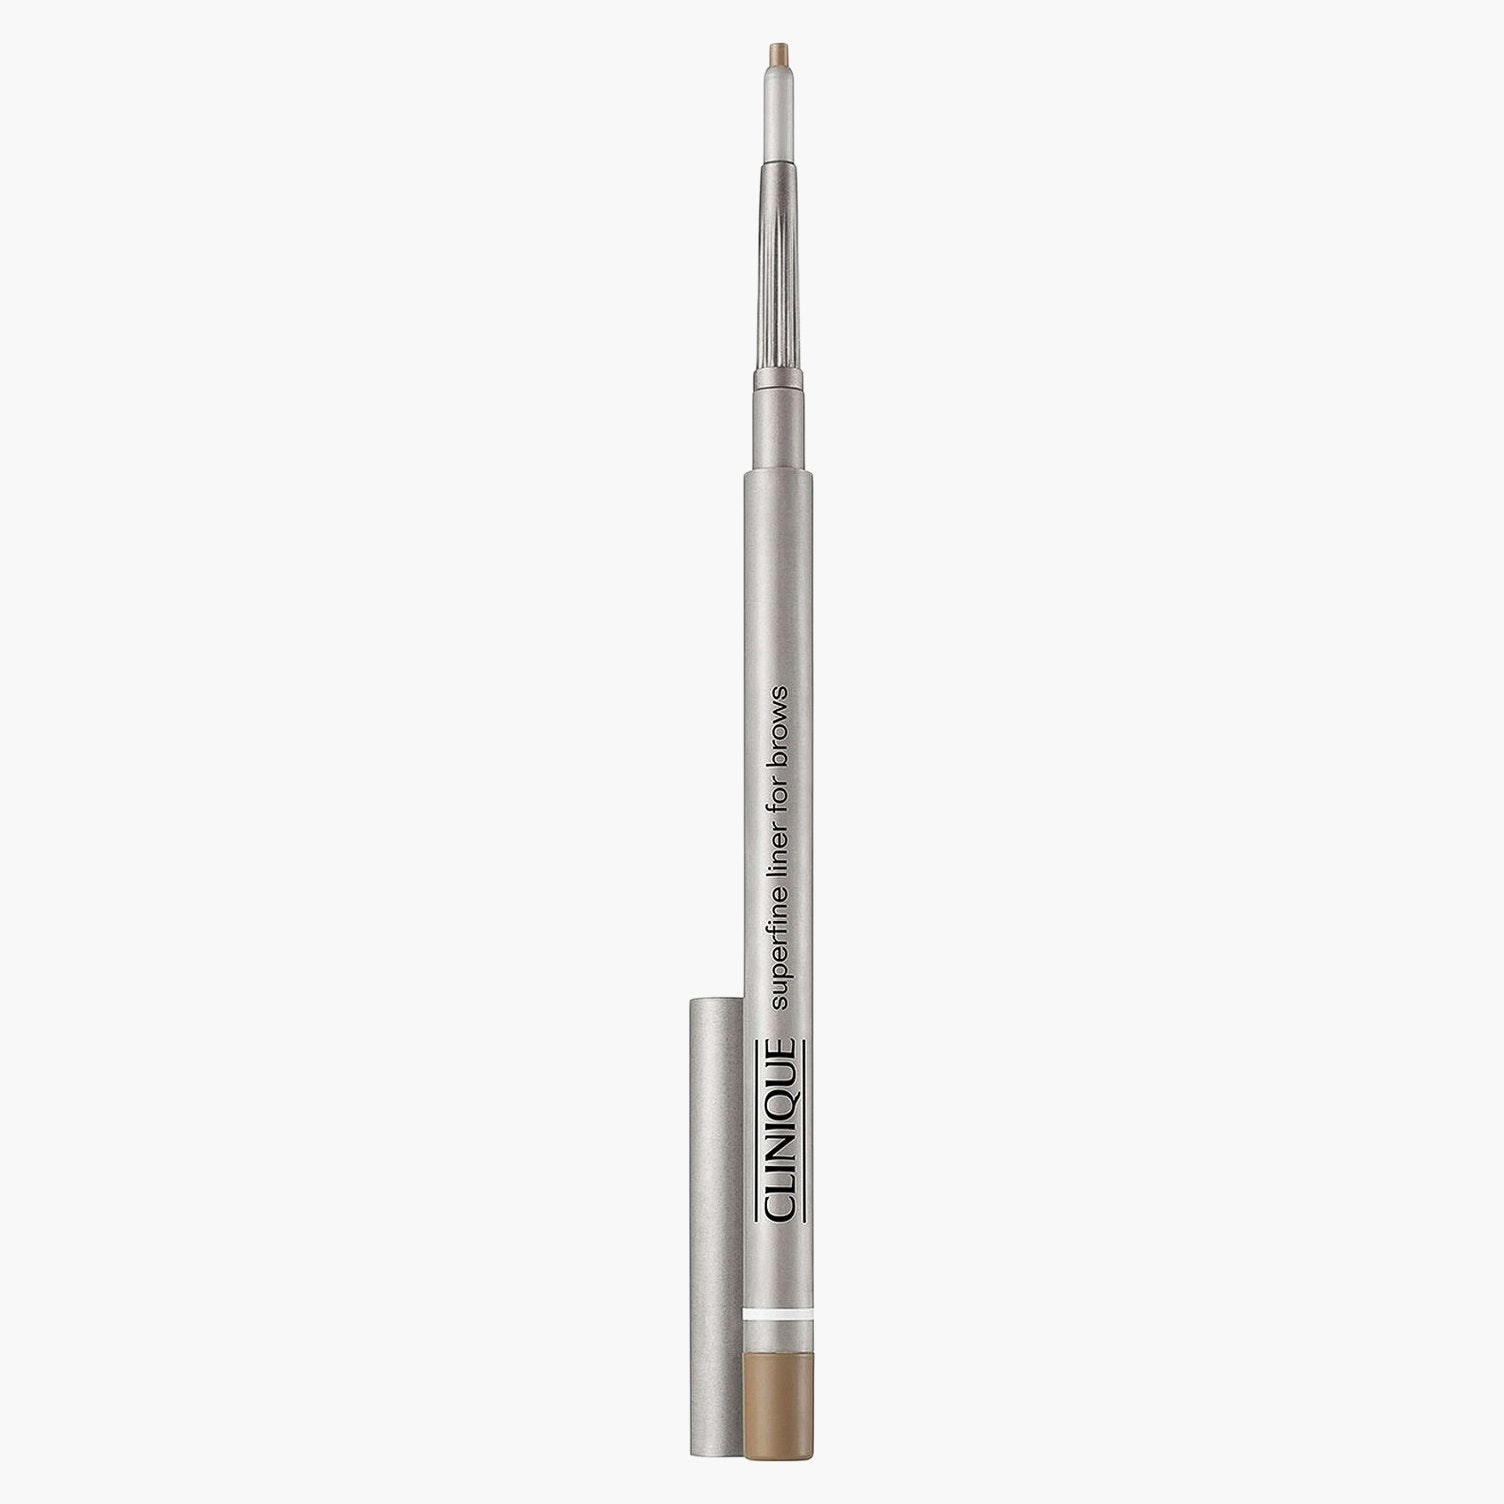 Супертонкий карандаш для бровей Superfine Liner оттенок Soft Blonde Clinique 1730 рублей